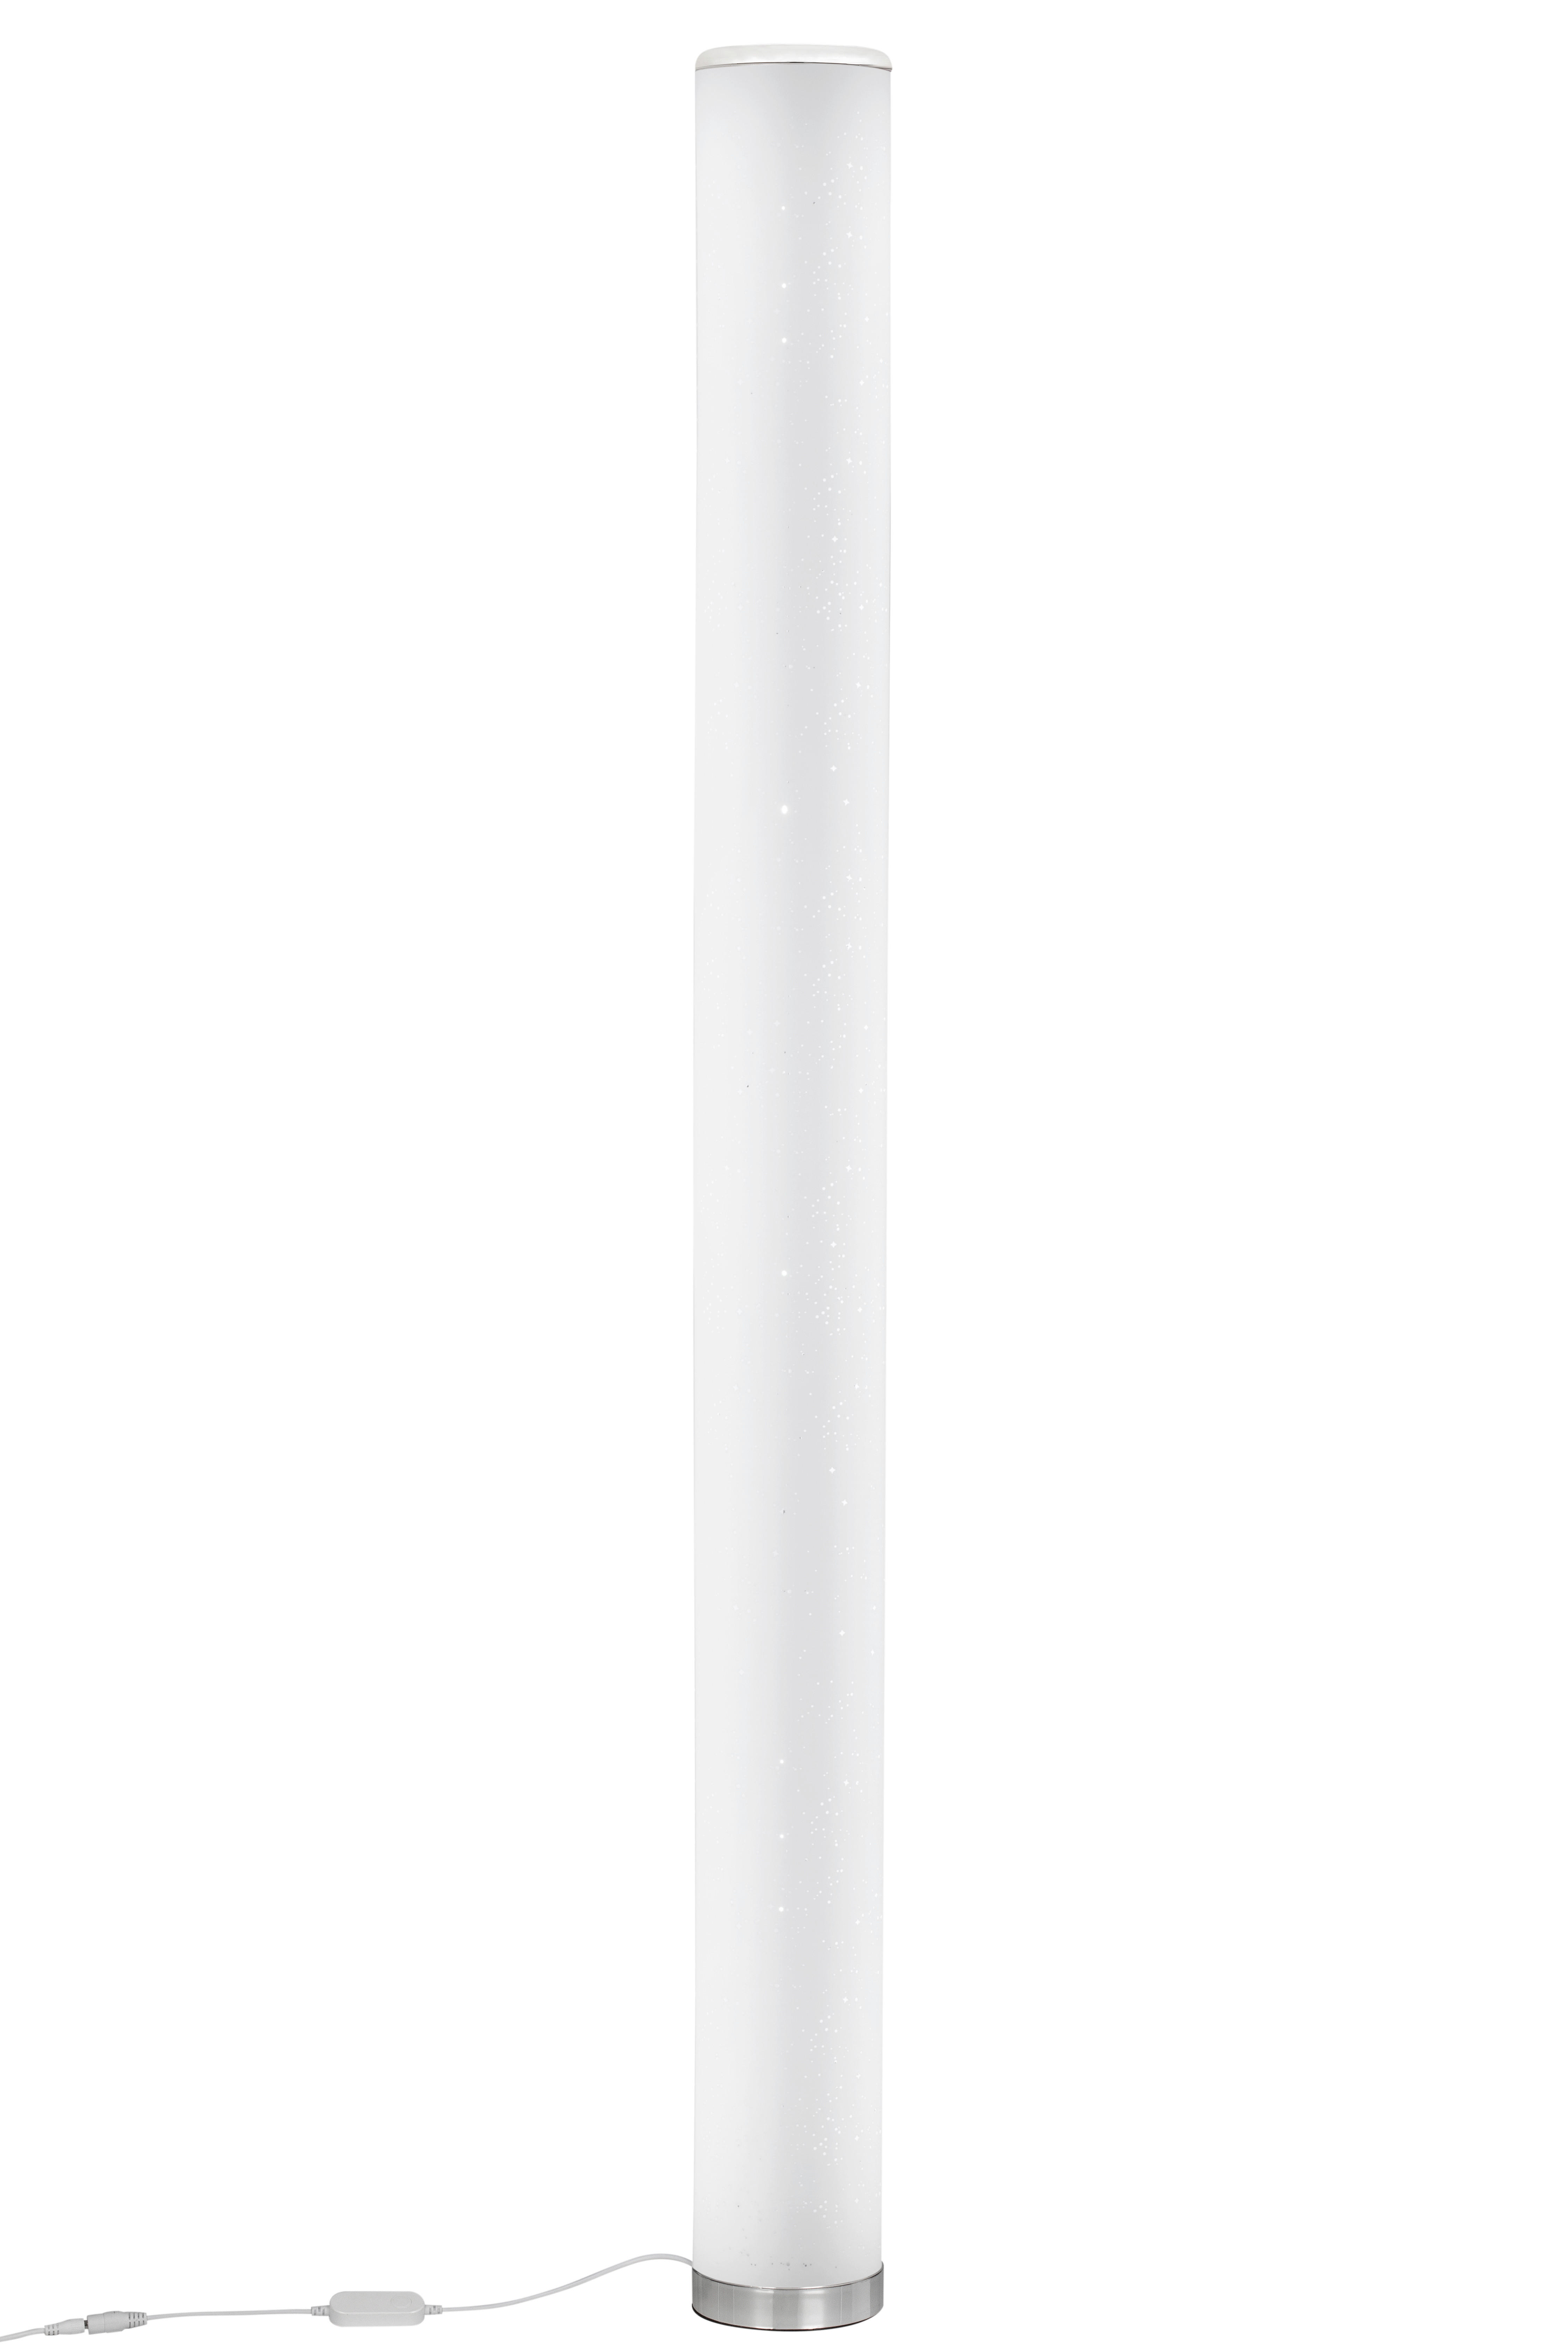 LED STOJACIA LAMPA, 13/150 cm  - biela/chrómová, Trend, plast (13/150cm) - Novel